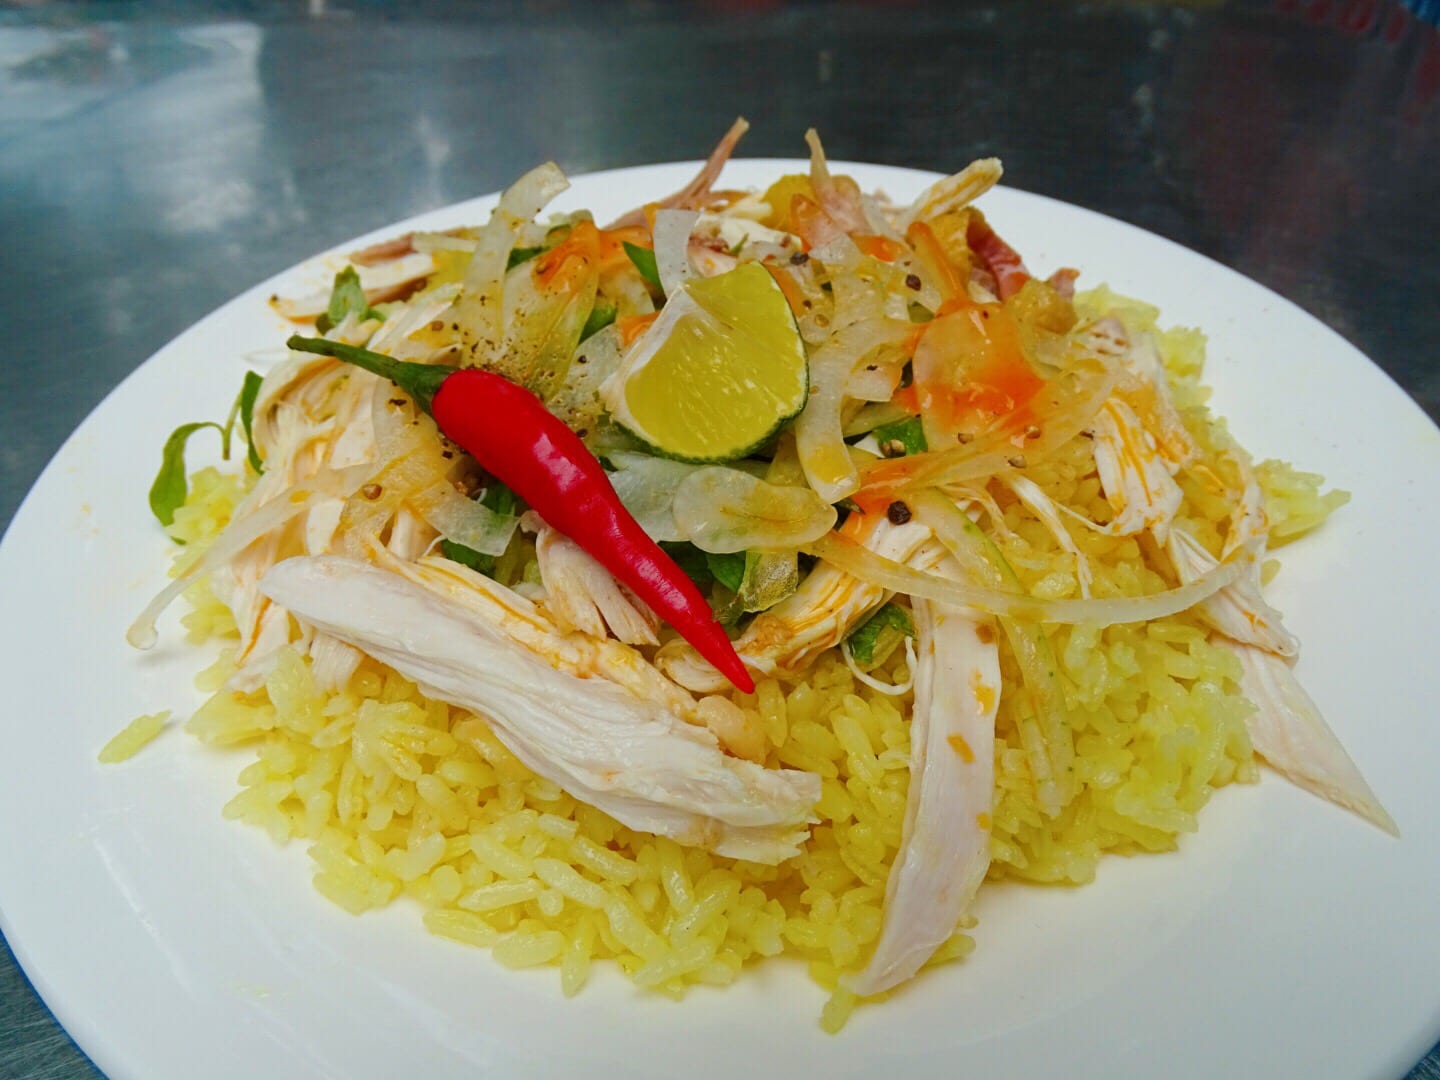 Coma ga chicken rice street food Hoi An